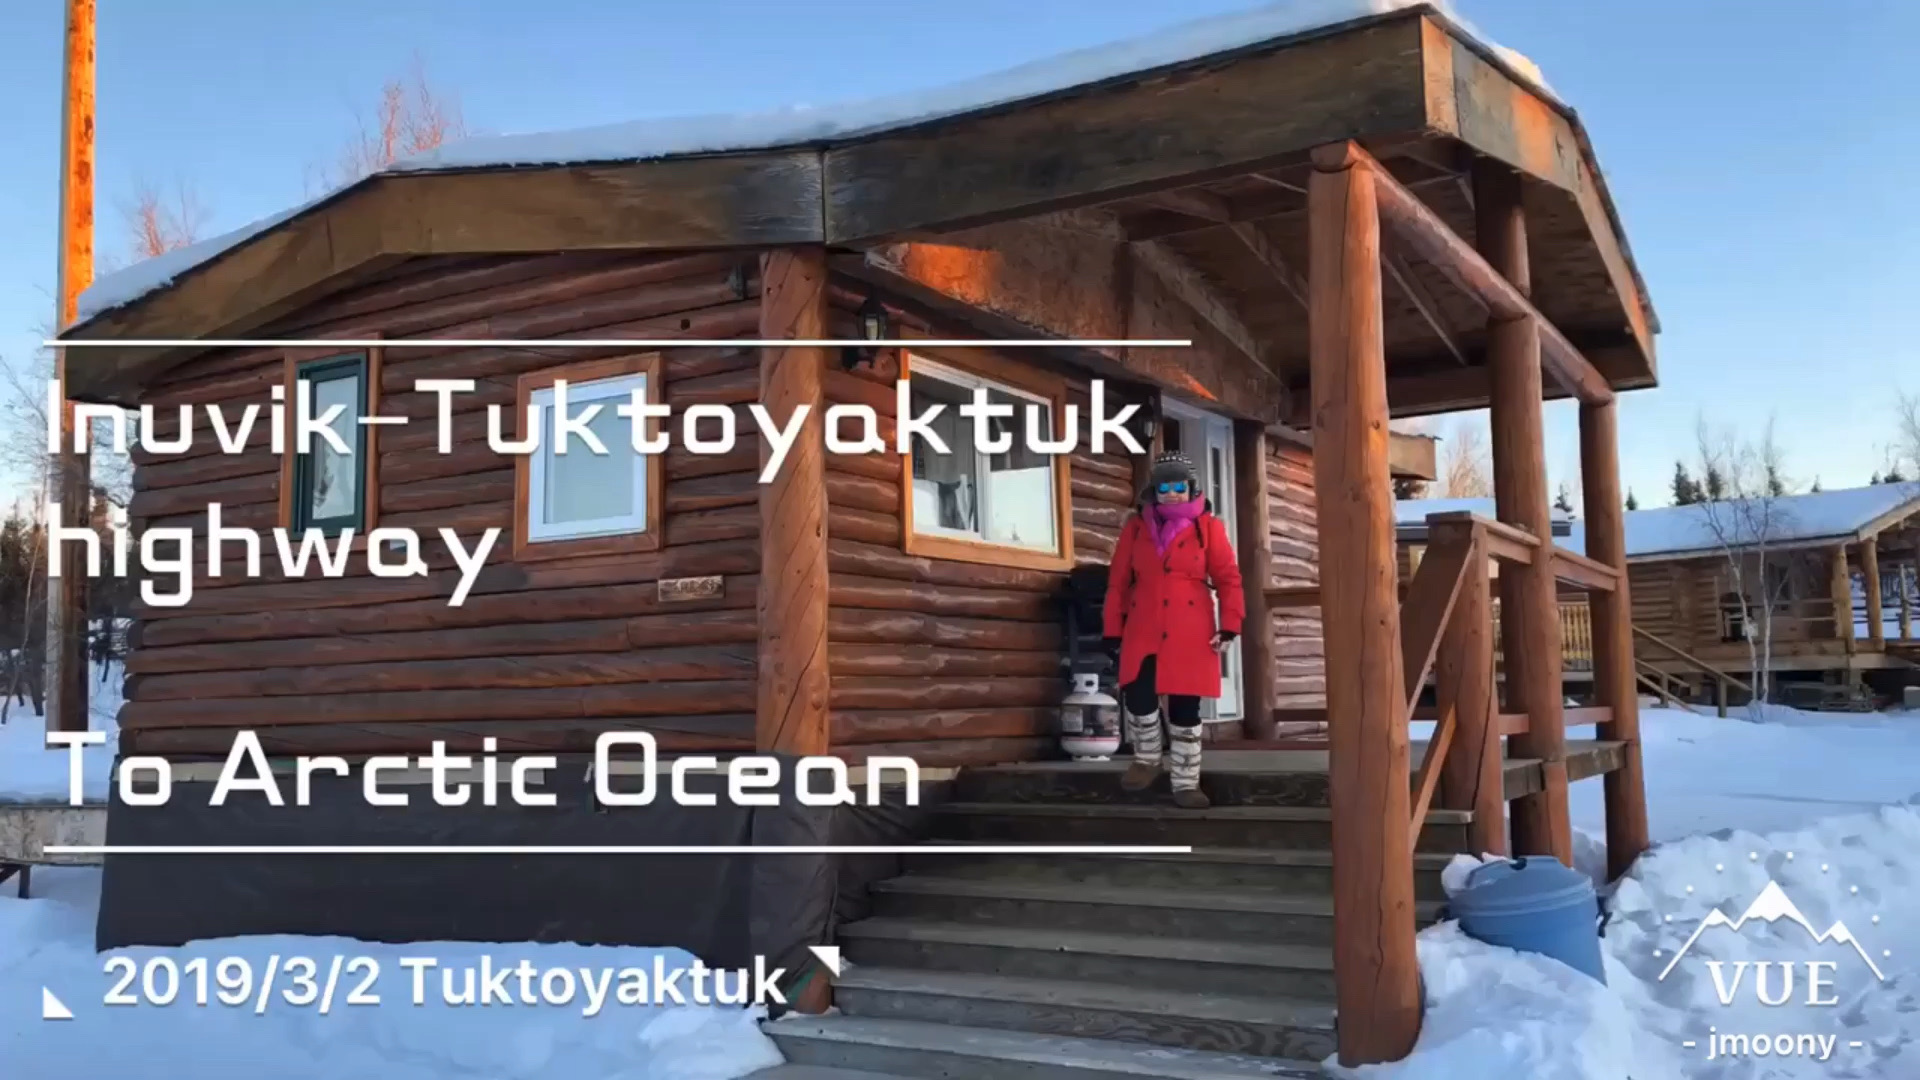 D6 到达北冰洋 tuktayaktuk是北冰洋边的小村庄，在 Inuvik-tuk的这段高速未通车